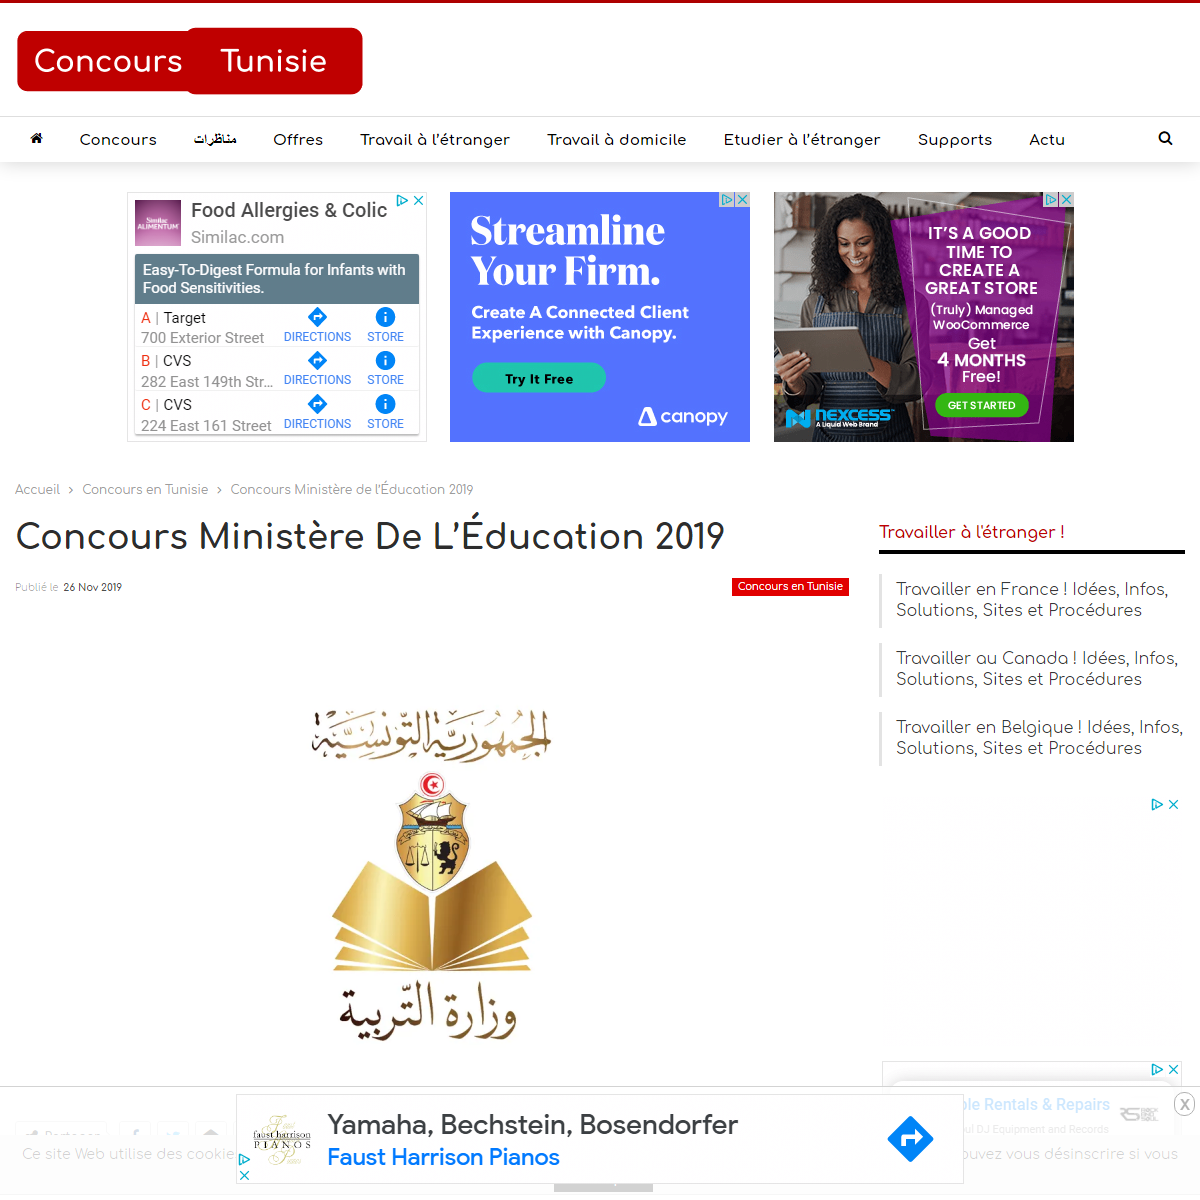 A complete backup of https://concours-tunisie.tn/concours-ministere-de-leducation/